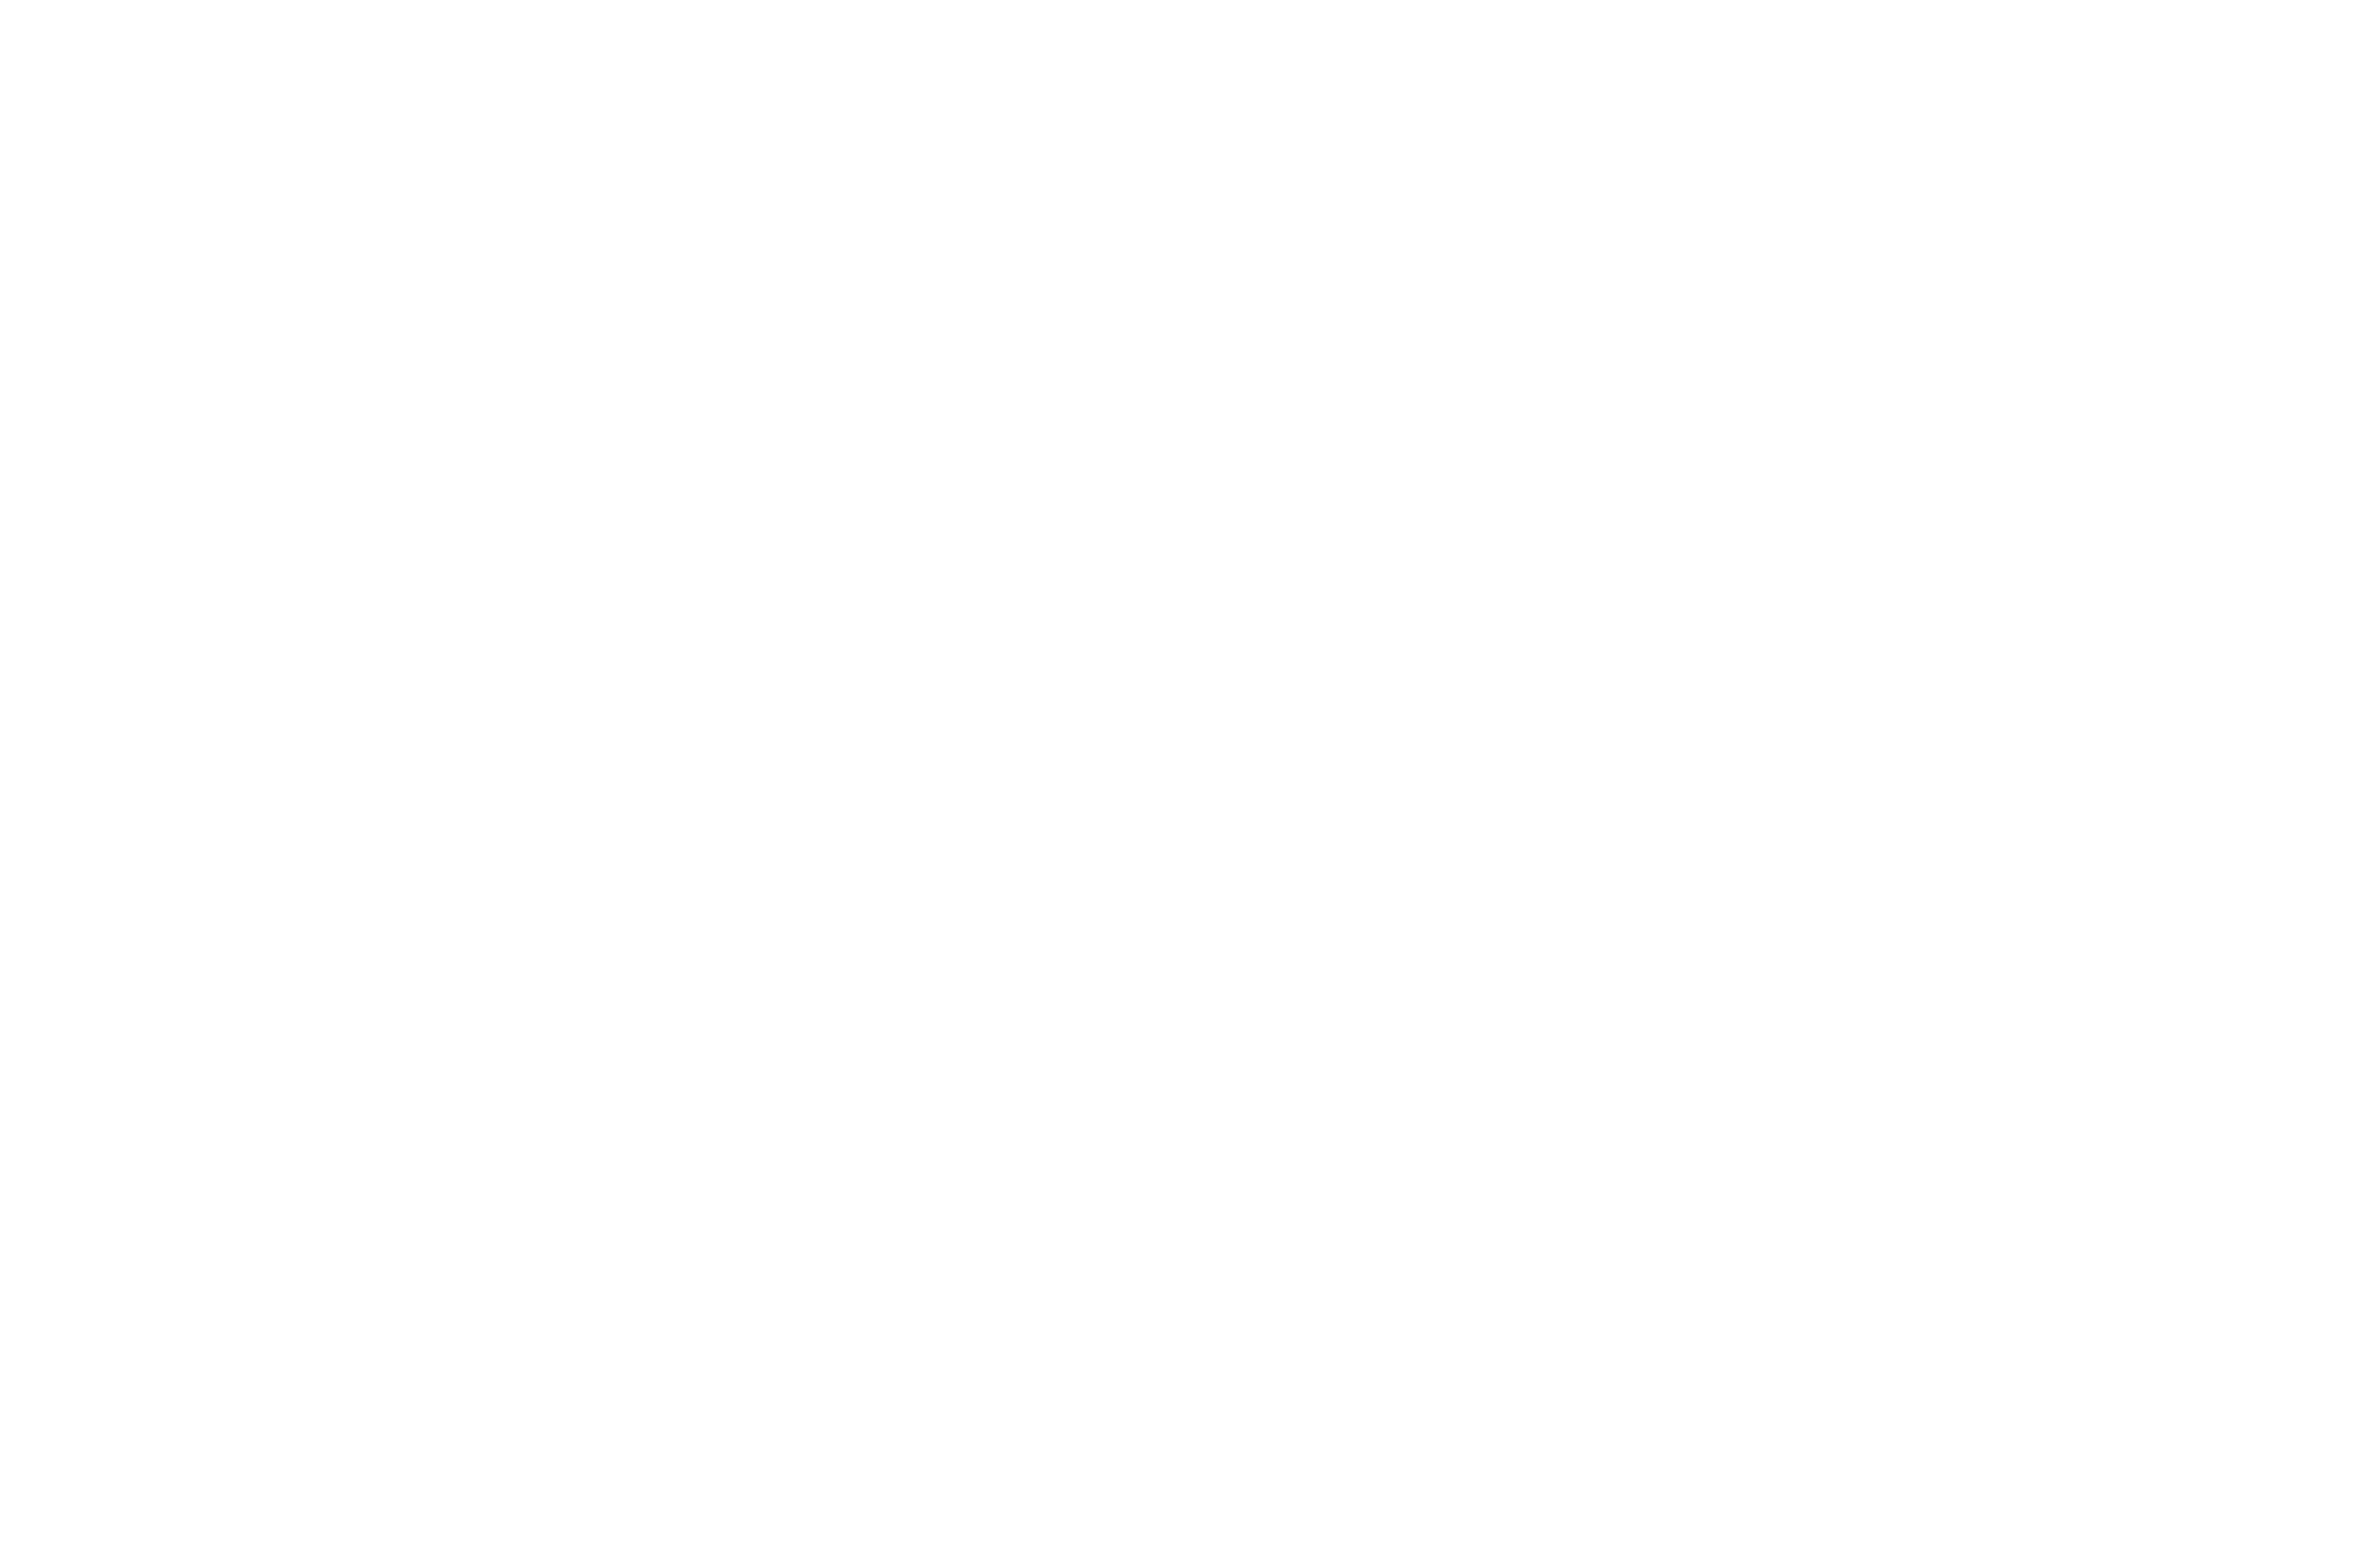 6th largest brokerage